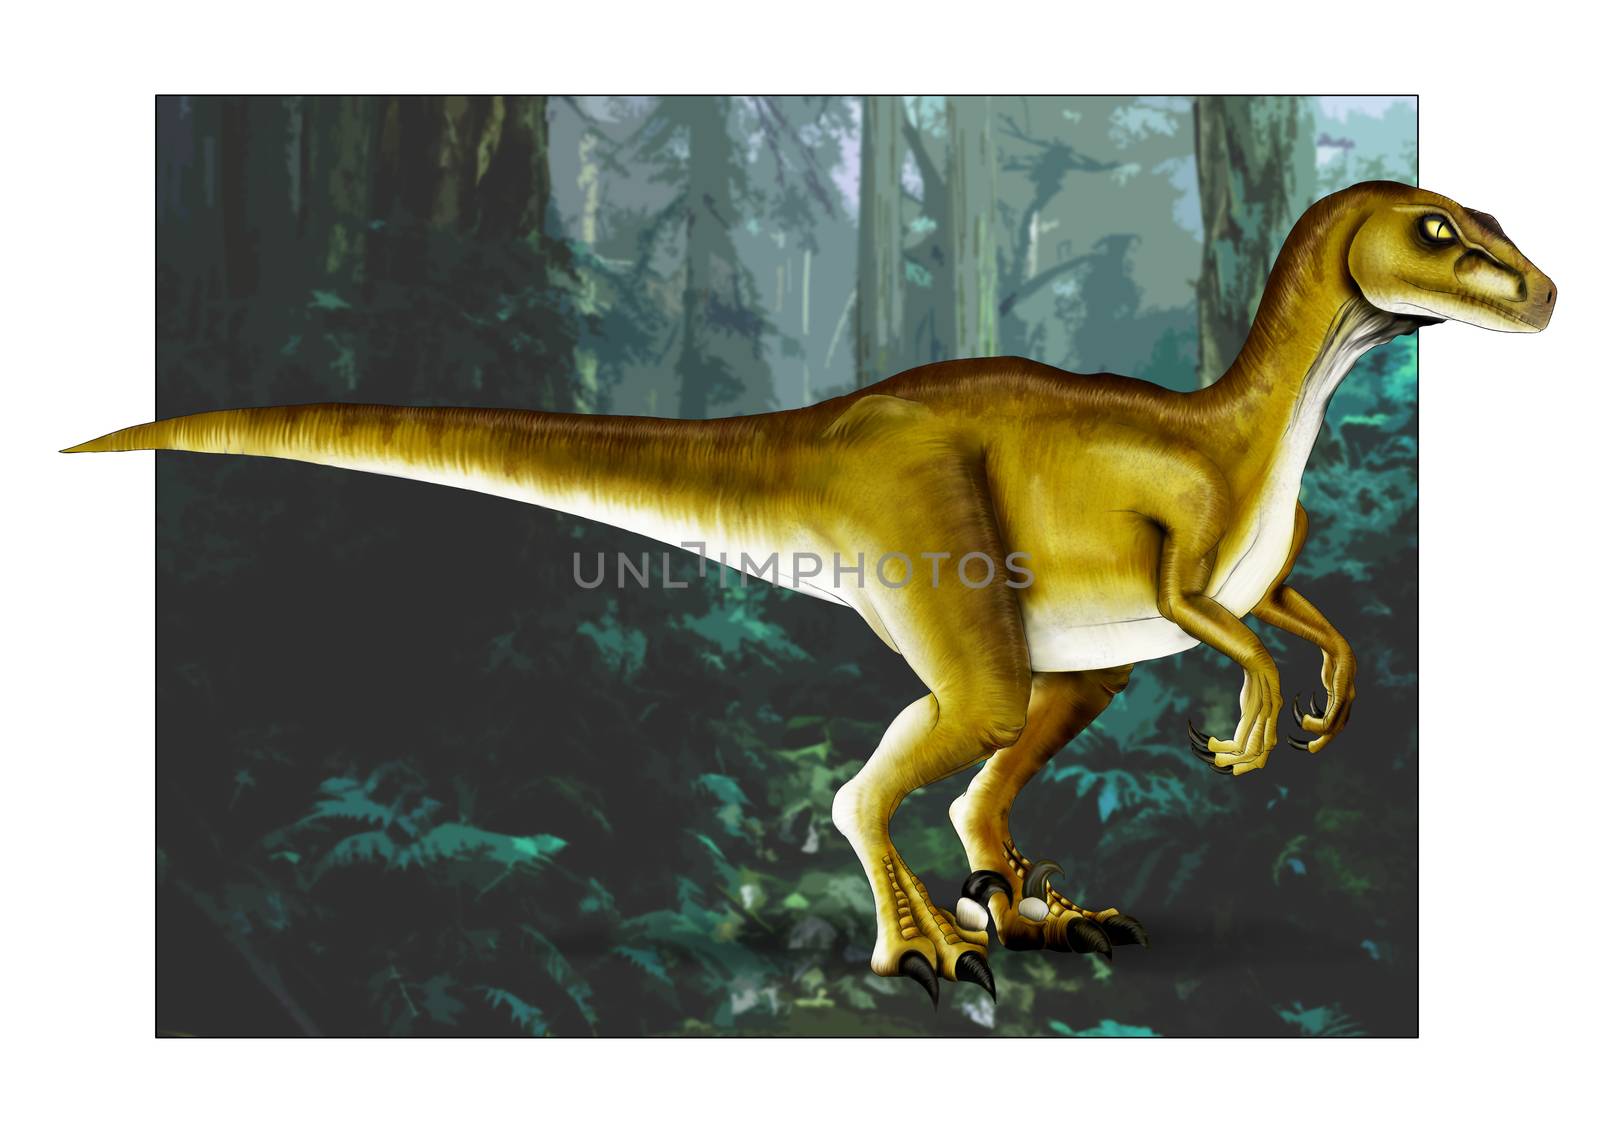 velociraptor dinosaur illustration hand drawn comic style by dean